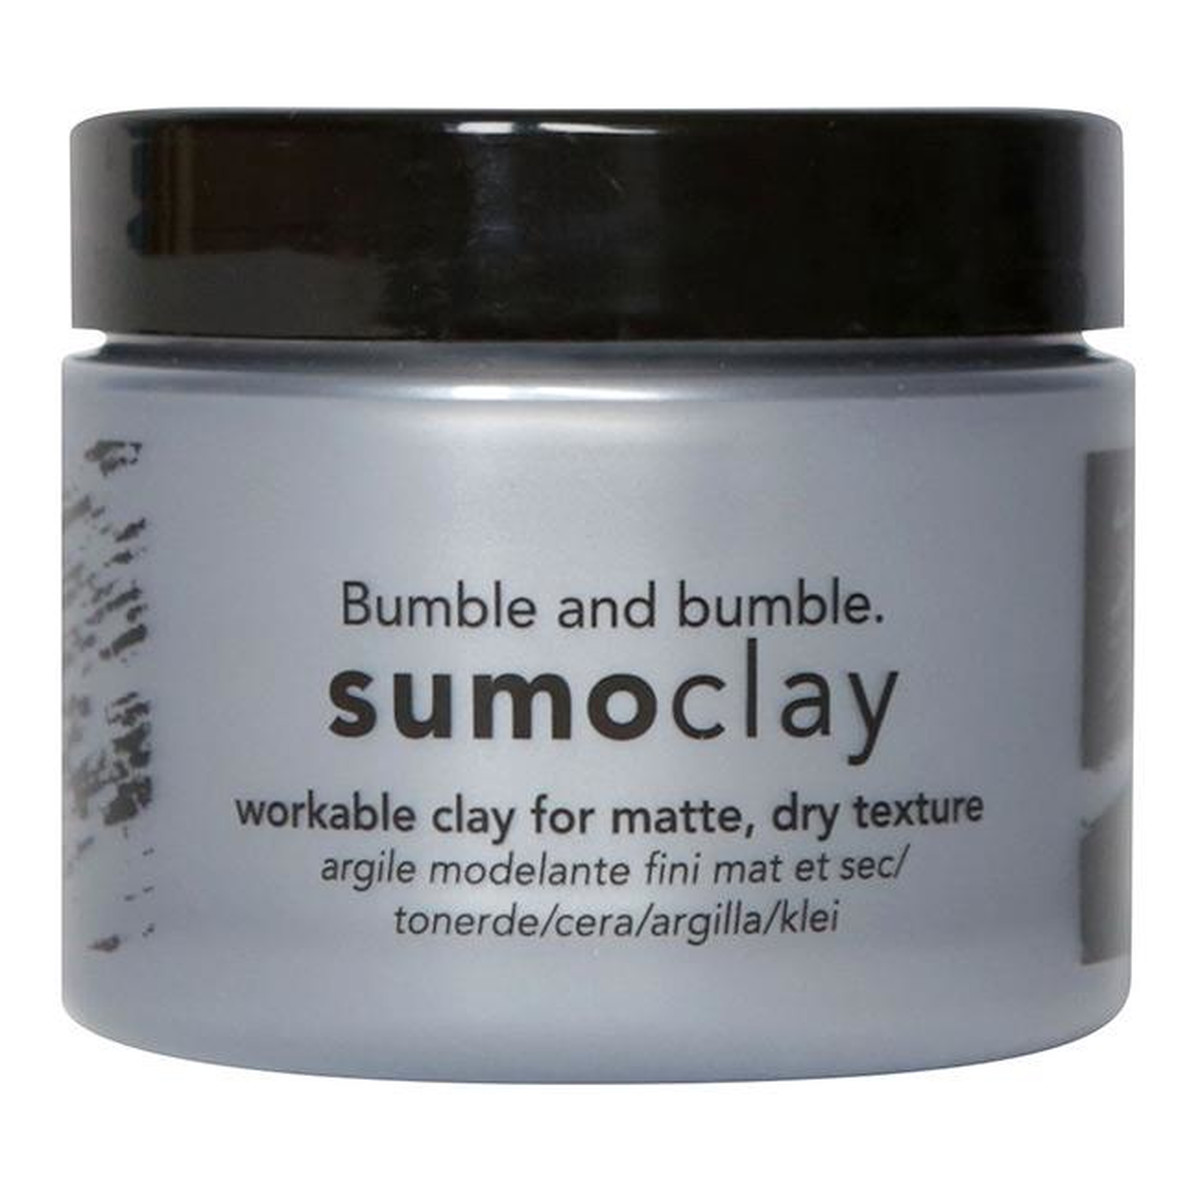 Bumble and bumble Sumoclay teksturyzator do włosów 45ml